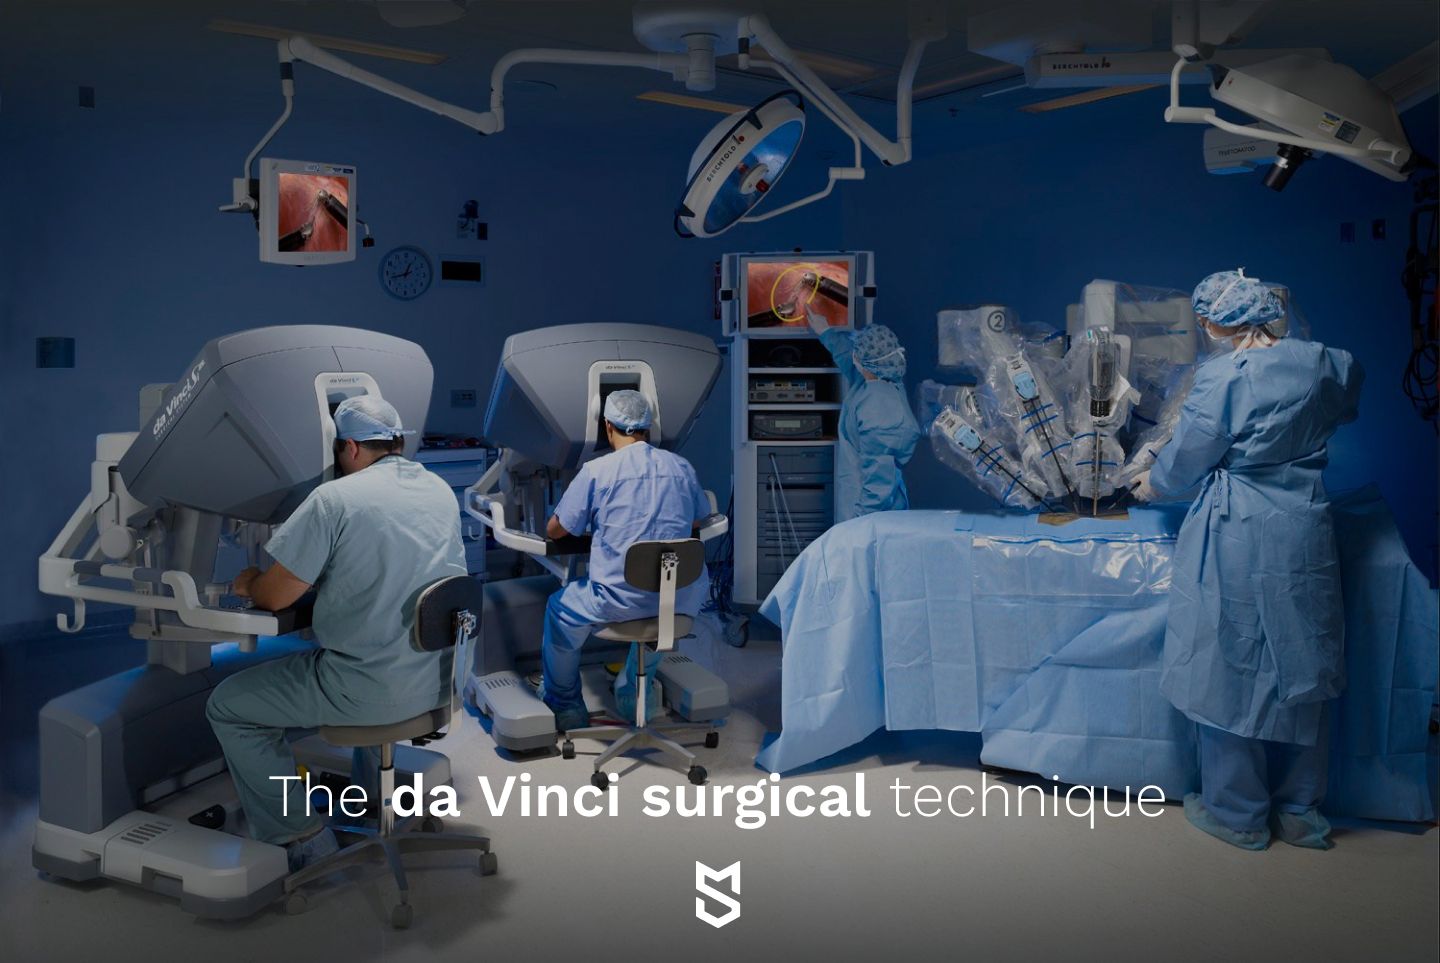 The da Vinci surgical technique